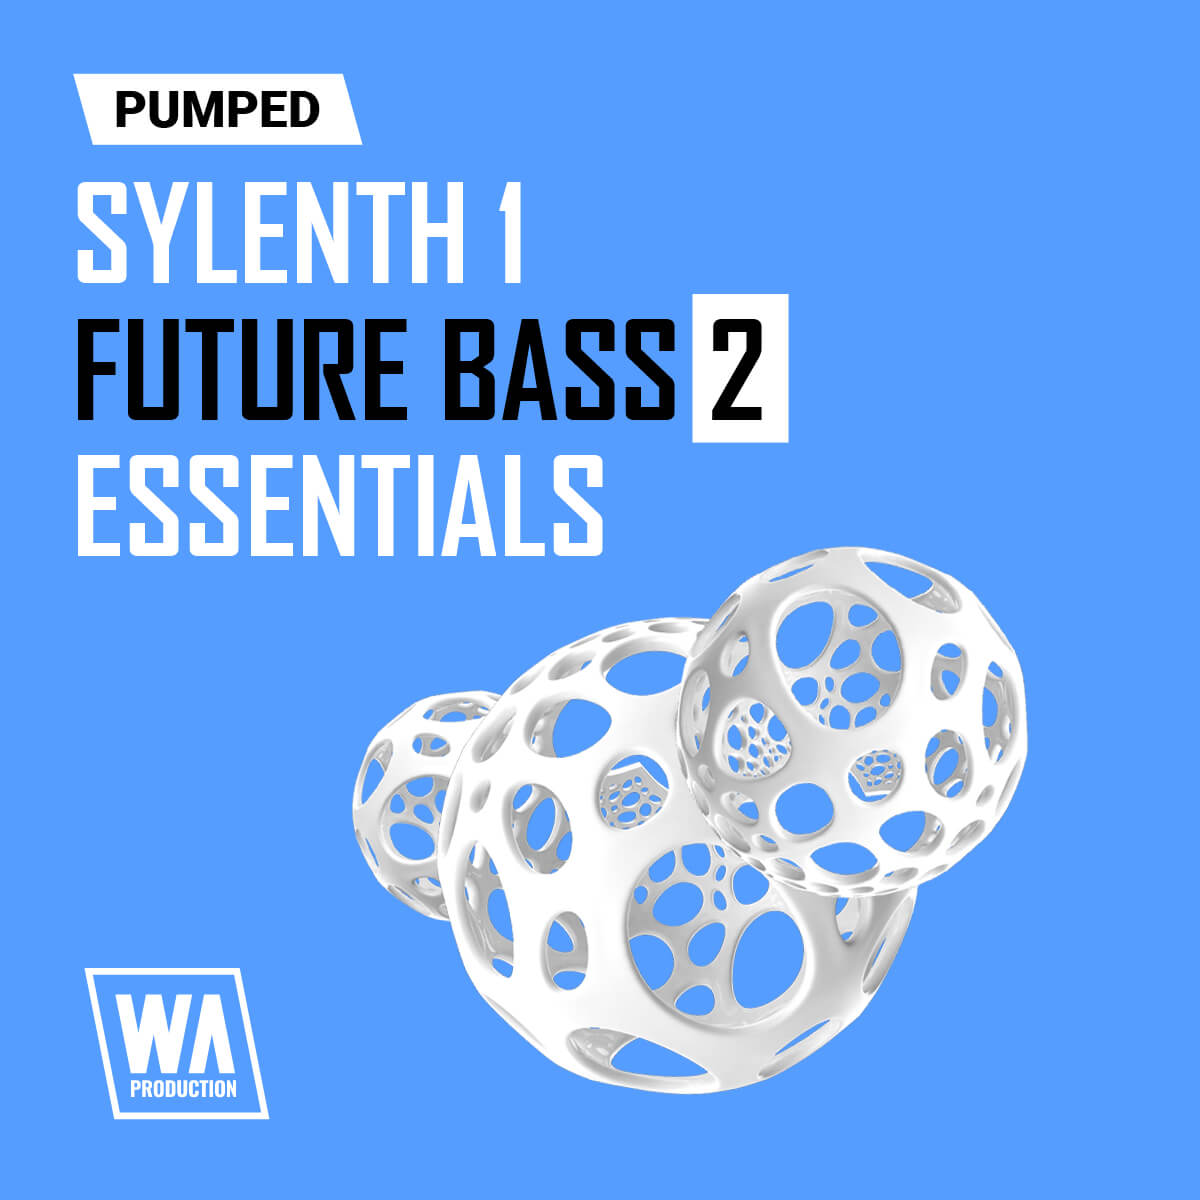 W.A. Production Pumped: Sylenth1 Future Bass Essentials 2